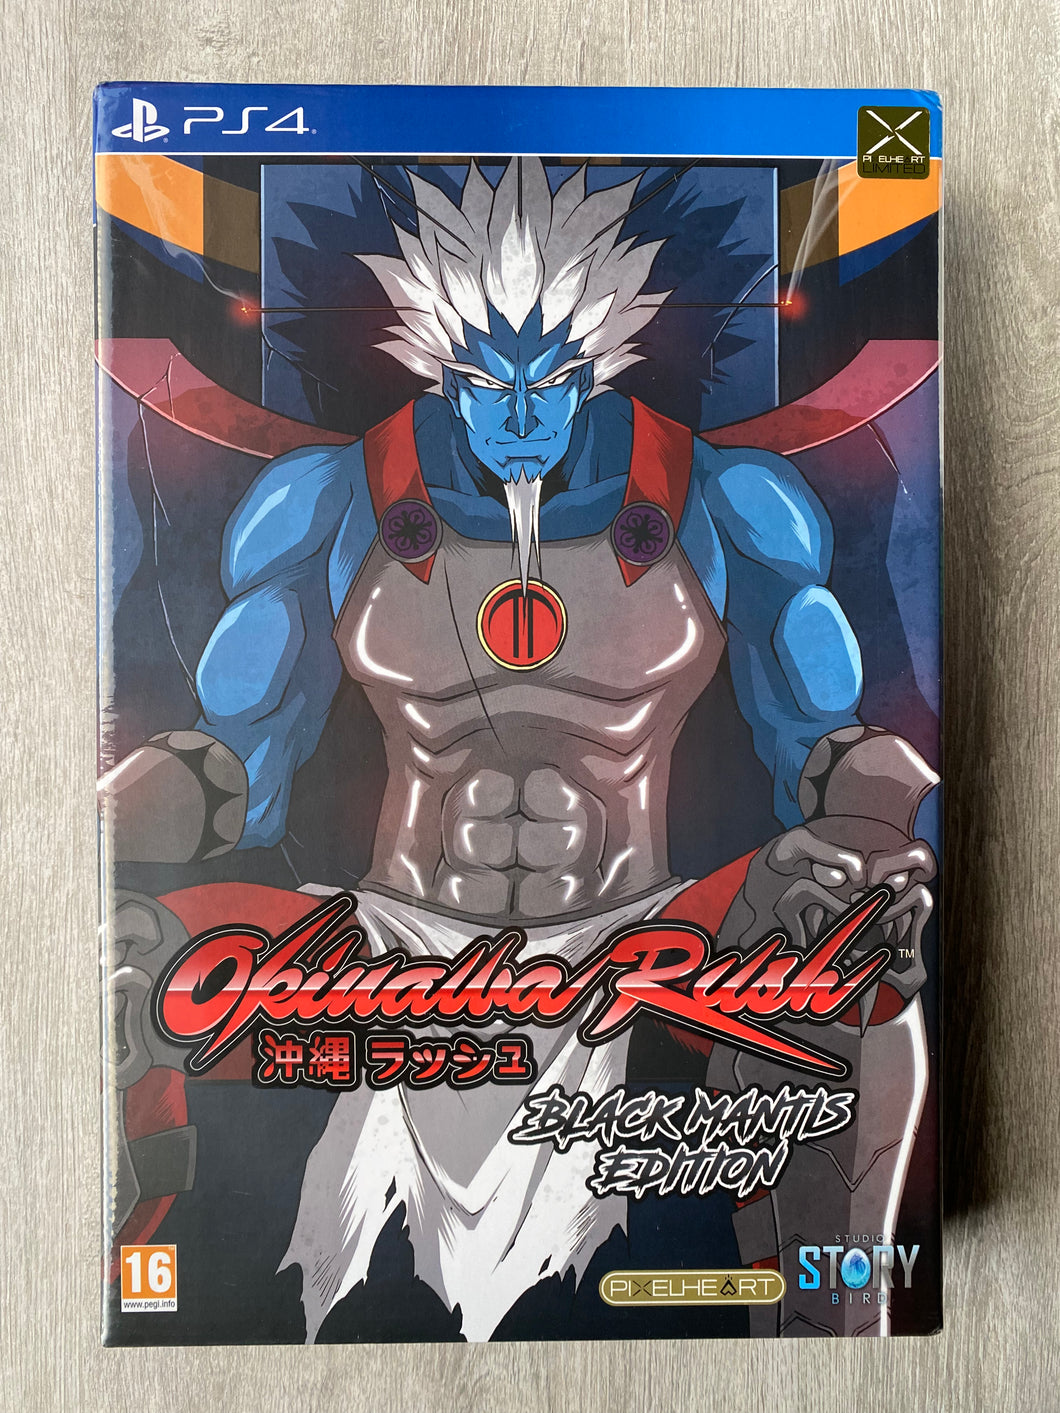 Okinawa rush Black mantis edition / Pixelheart / PS4 / 1000 copies